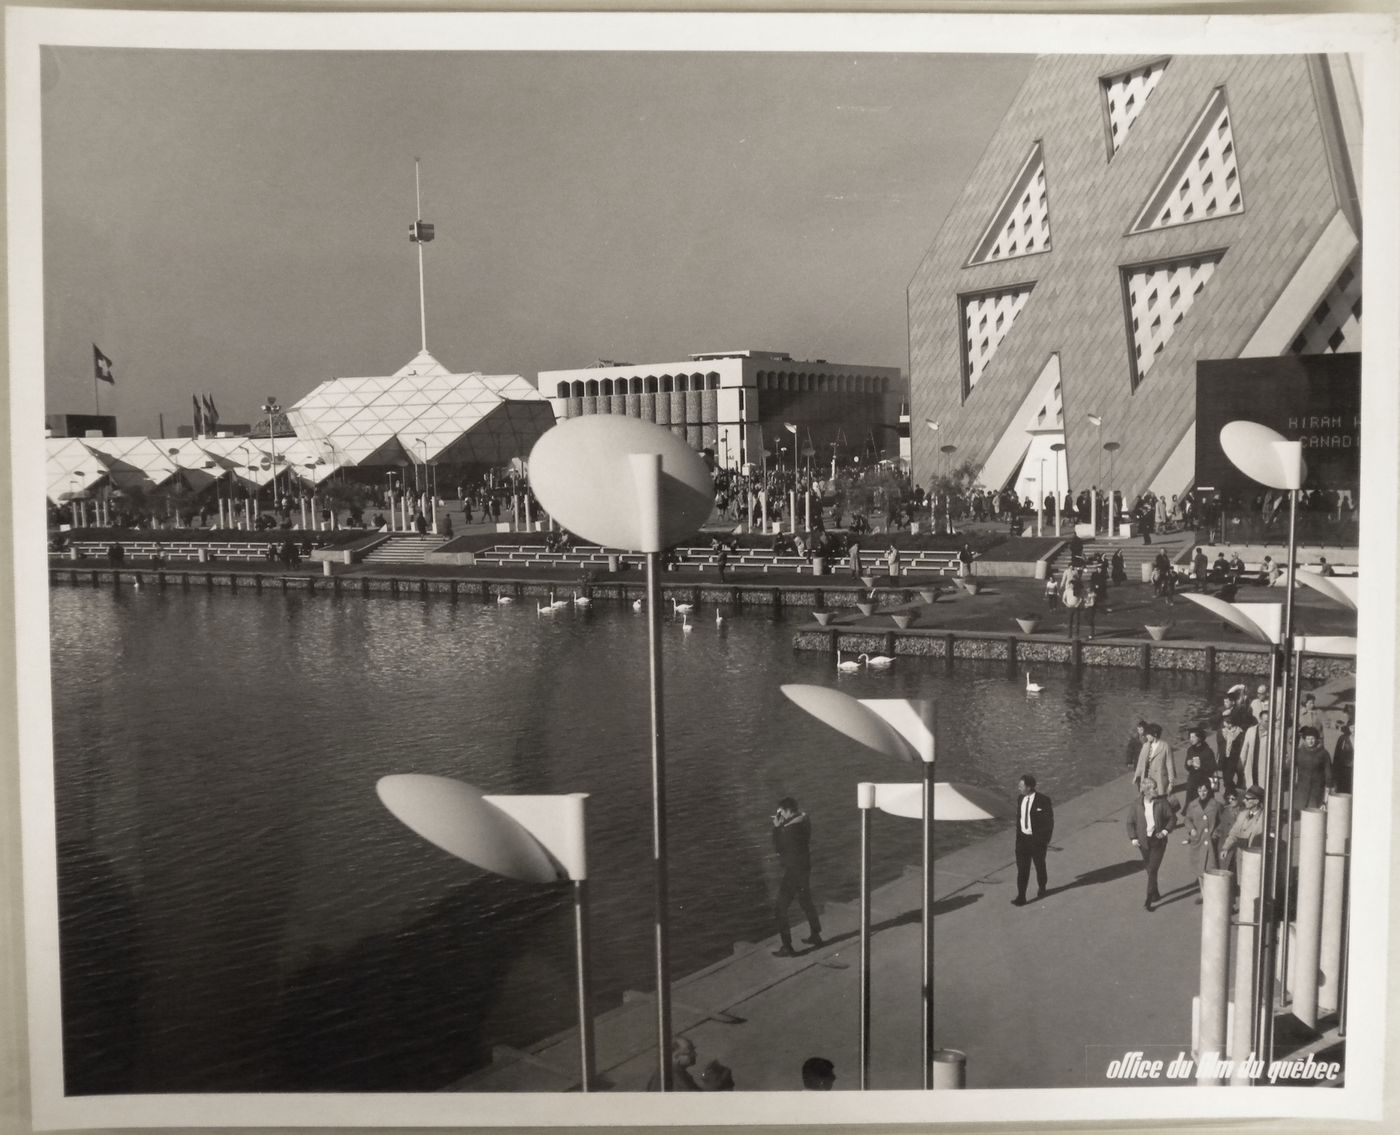 Partial view of the Swan Lake, the Pavilions of Austria and Iran, and Man the Explorer Pavilion, Expo 67, Montréal, Québec